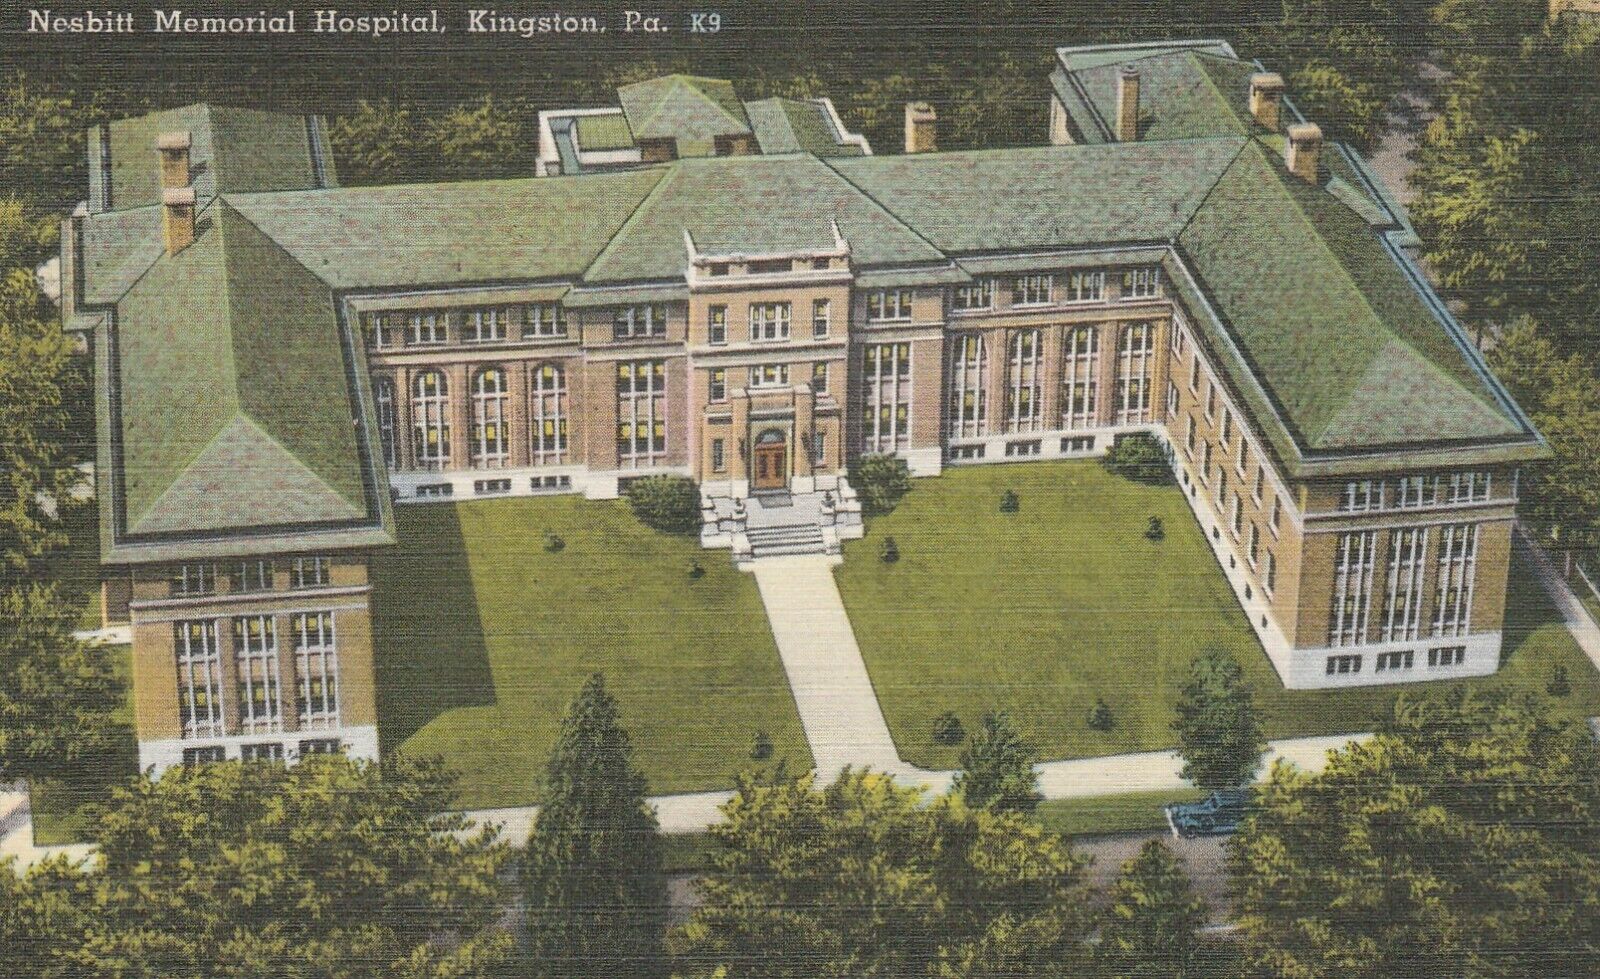 Kingston Pa Nesbit Memorial Hospital Pennsylvania Postcard